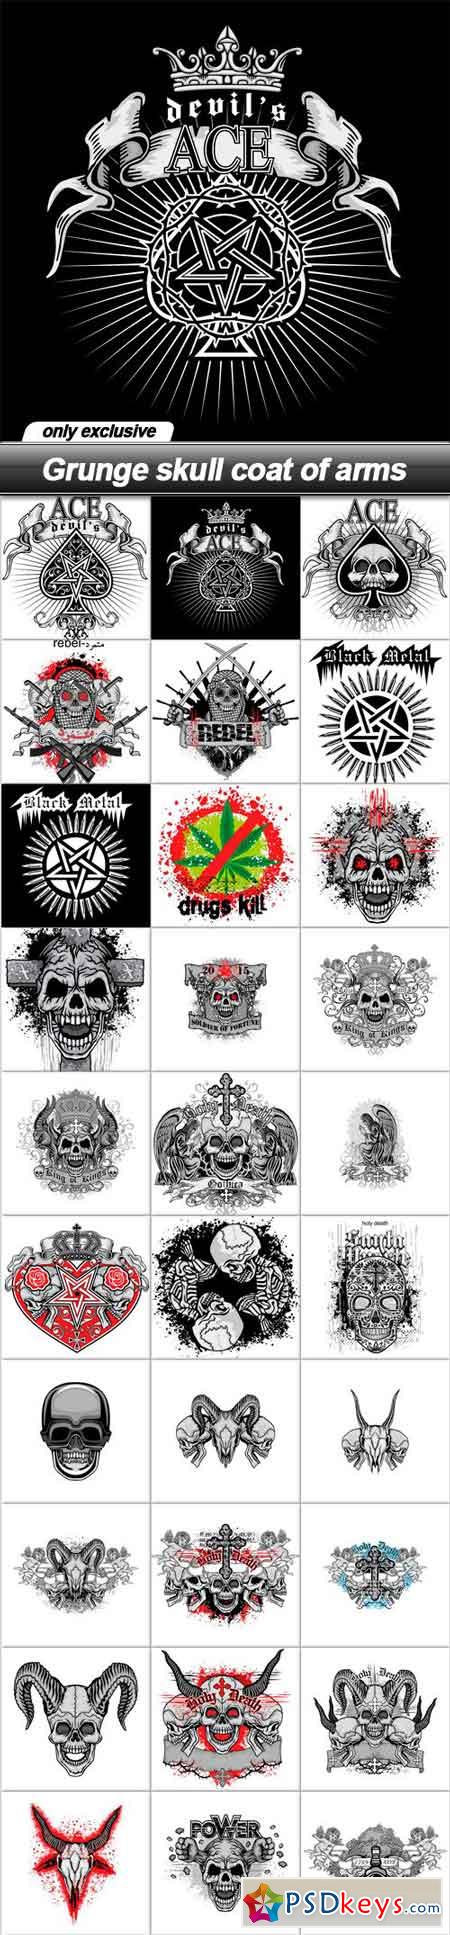 Grunge skull coat of arms - 30 EPS